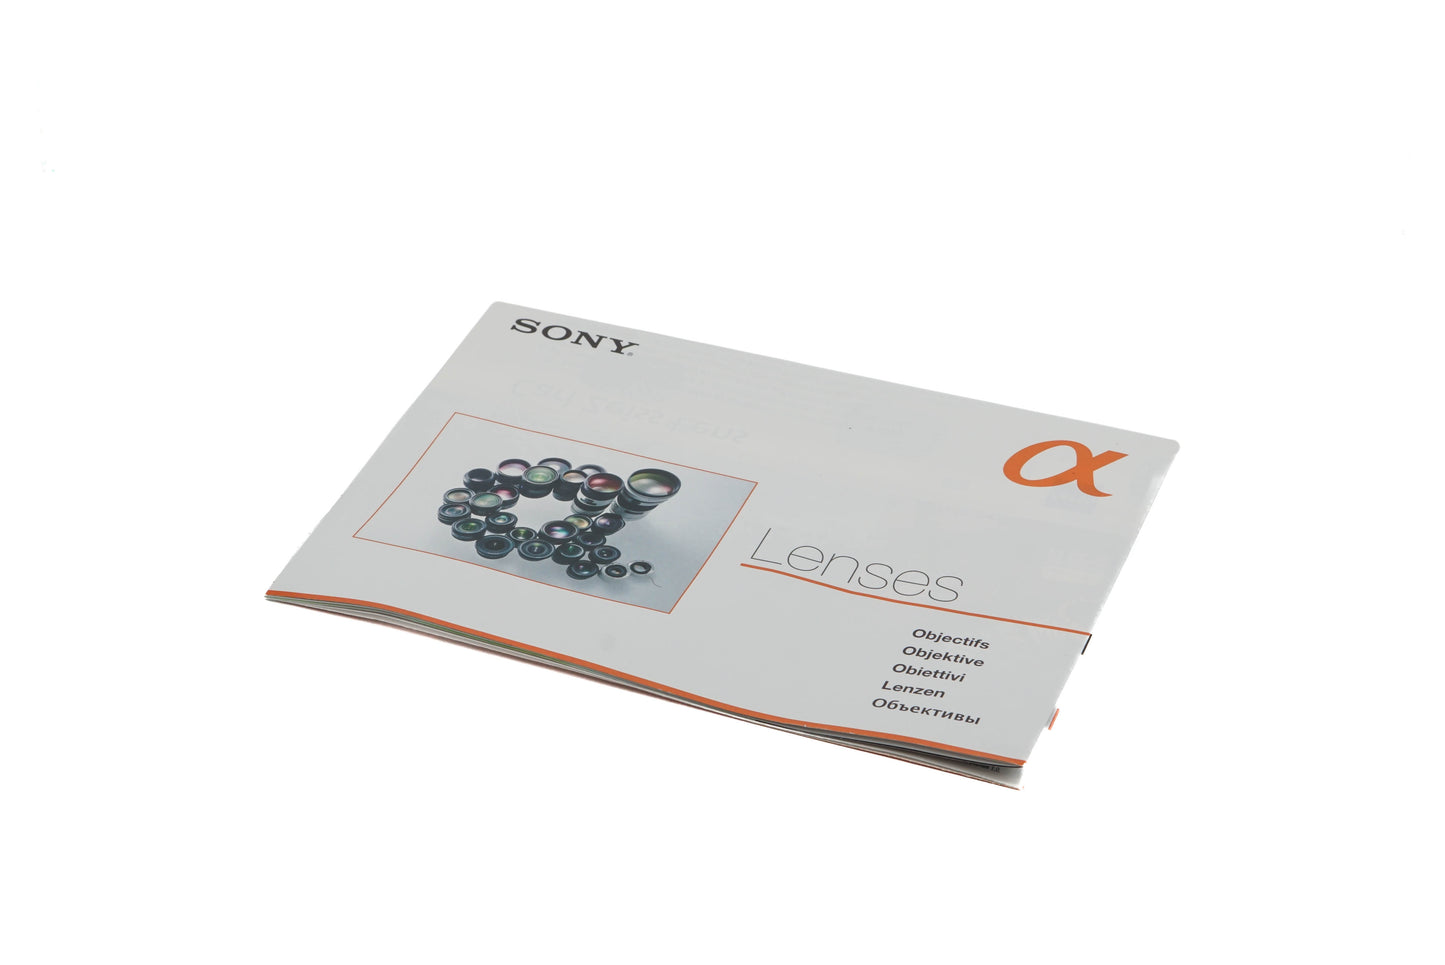 Sony Alpha Lenses Brochure